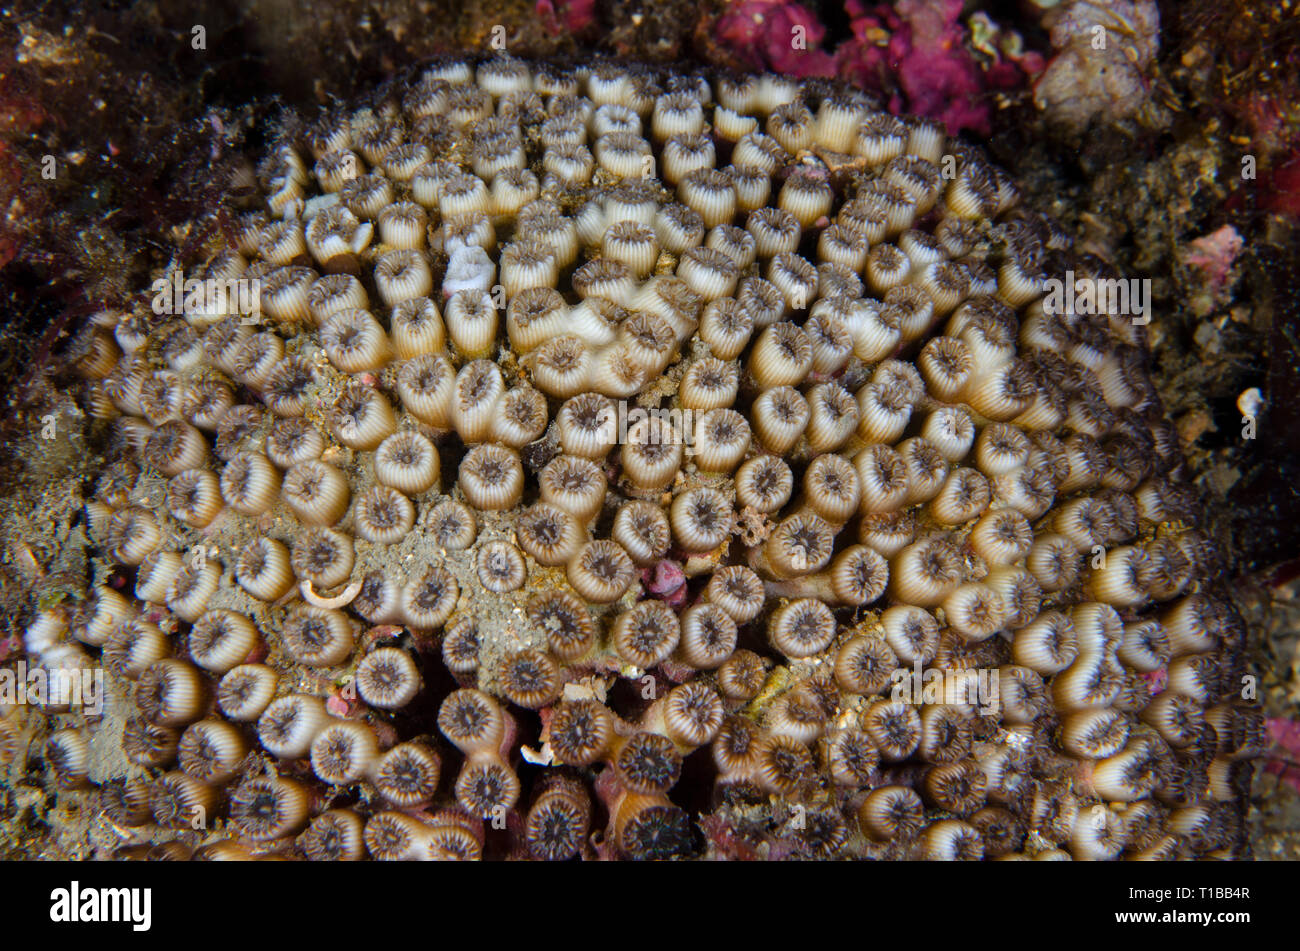 Bushy Coral, Mediterranean Pillow Coral, Cladocora caespitosa, Caryophylliidae, Tor Paterno Marine Protected Area, Rome, Italy, Mediterranean Sea Stock Photo